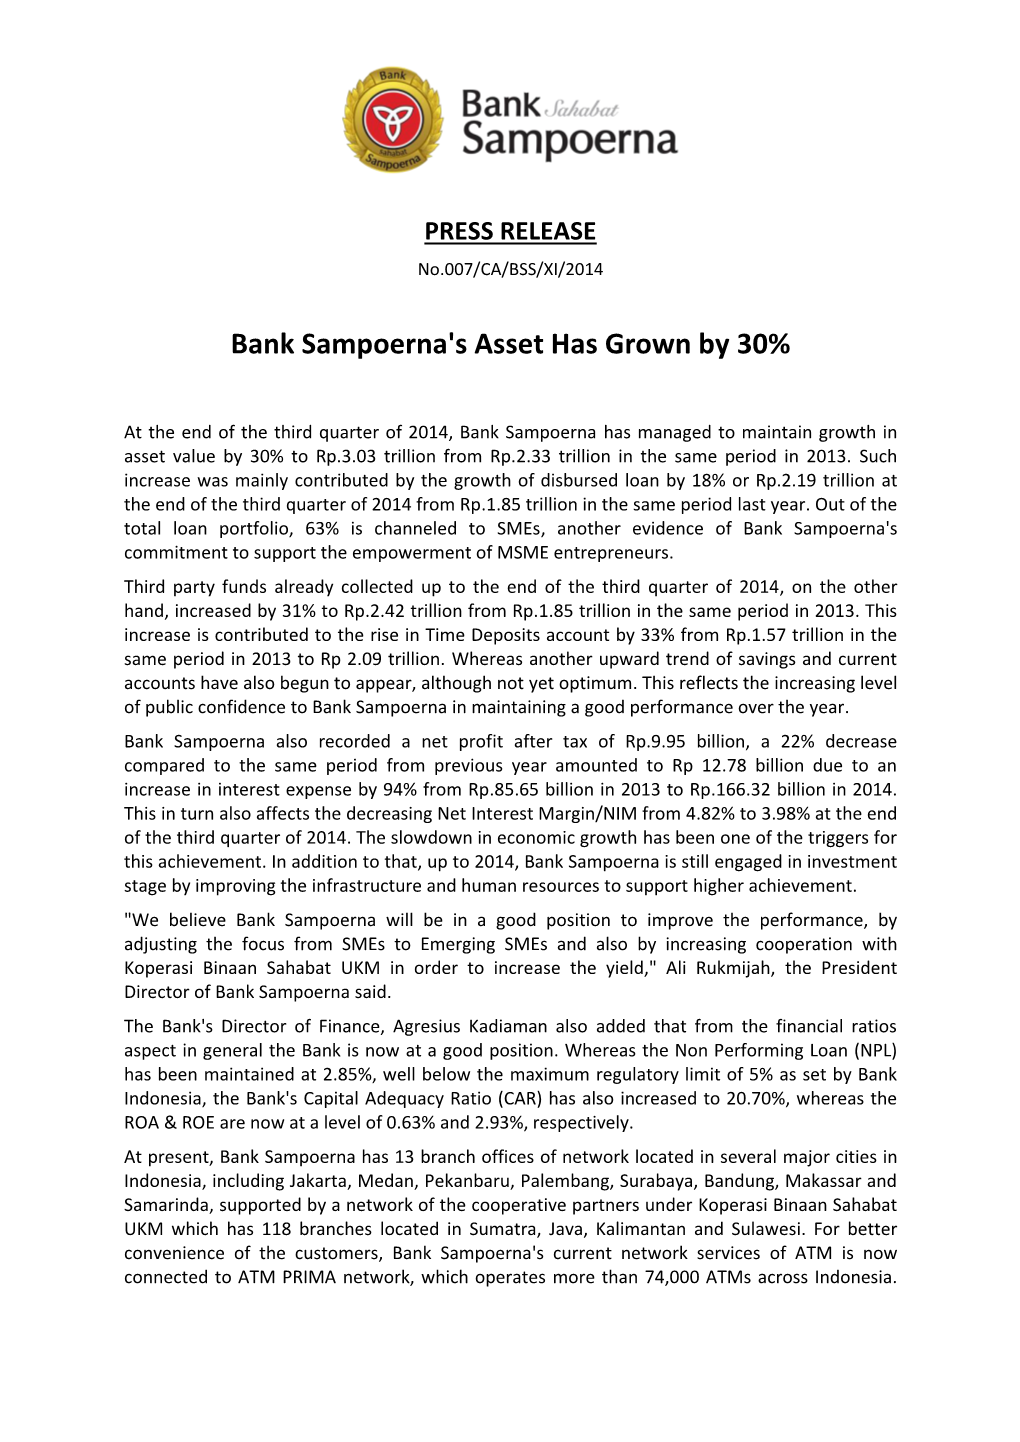 Bank Sampoerna's Asset Has Grown by 30%